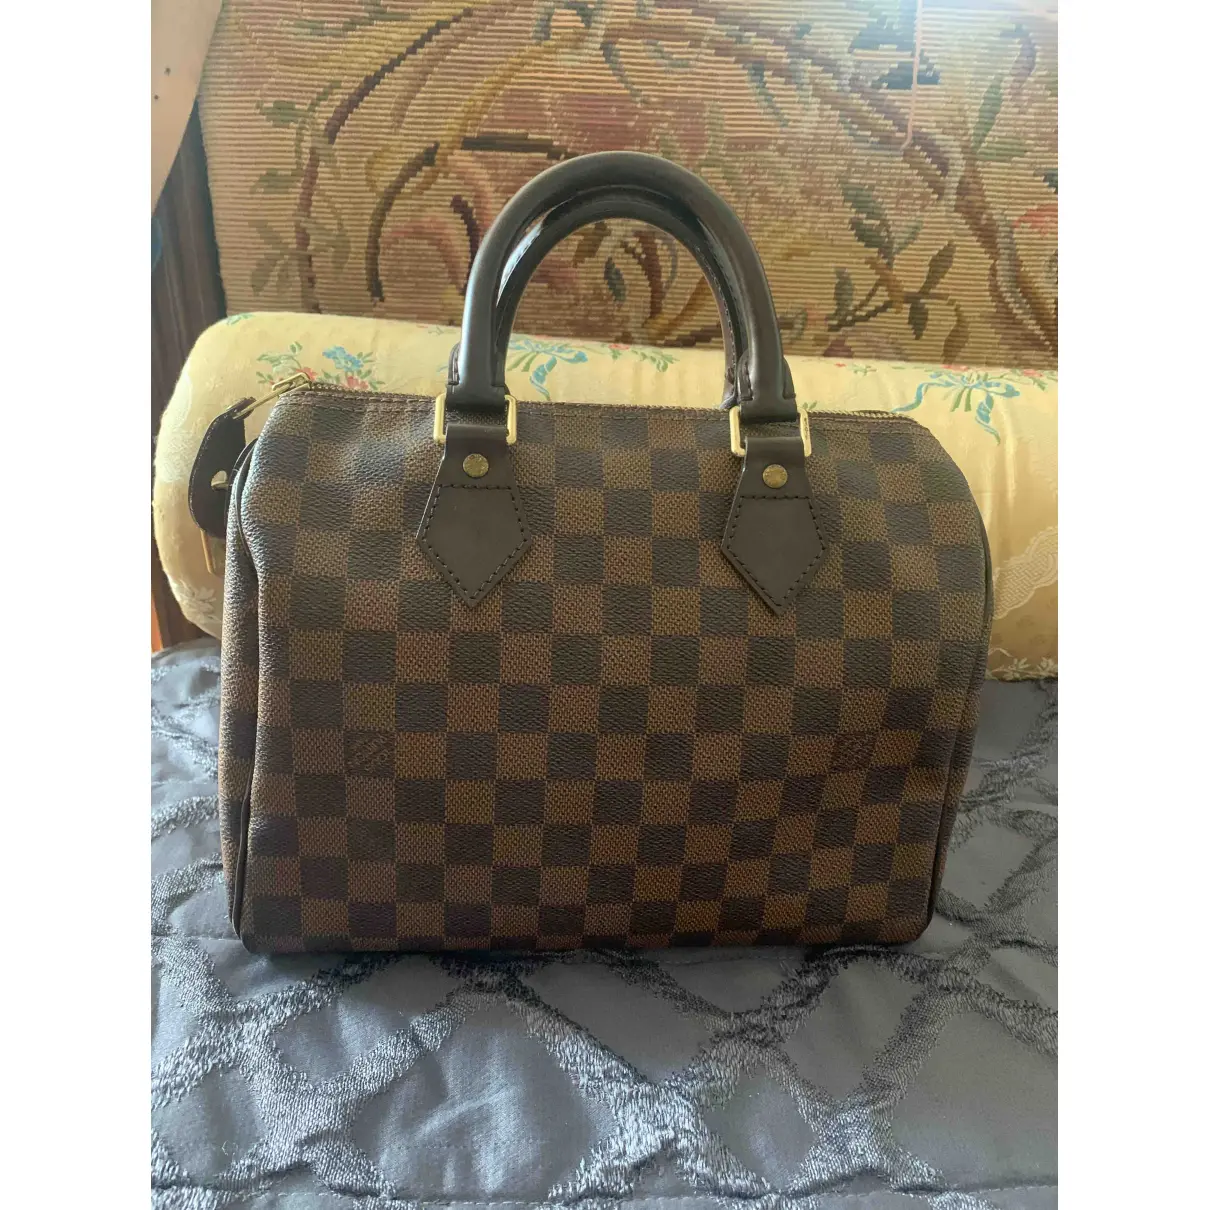 Buy Louis Vuitton Speedy Doctor 25 cloth handbag online